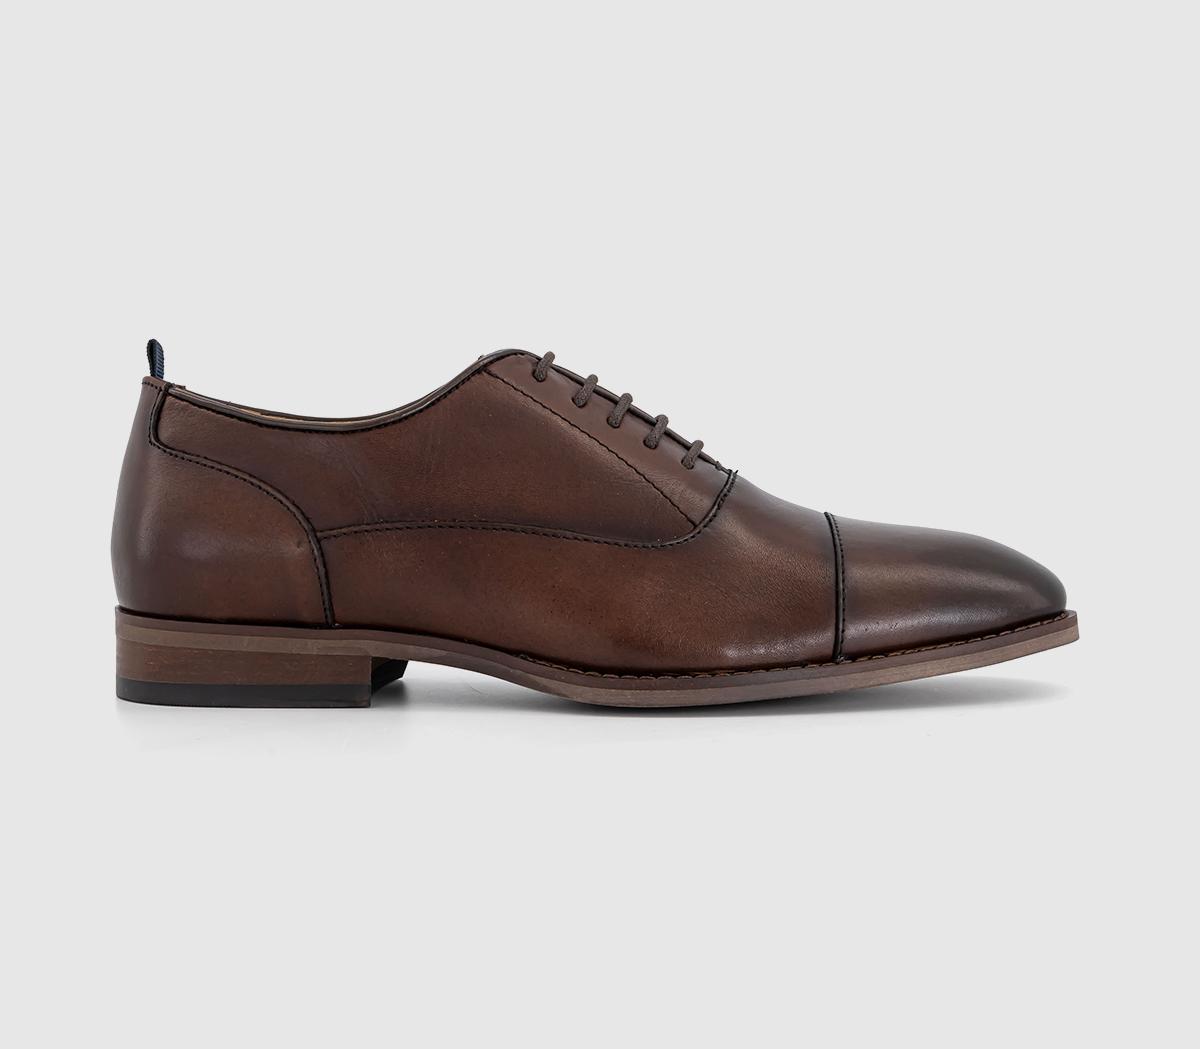 OFFICE Montana Toecap Oxford Shoes Brown Leather - Men’s Smart Shoes